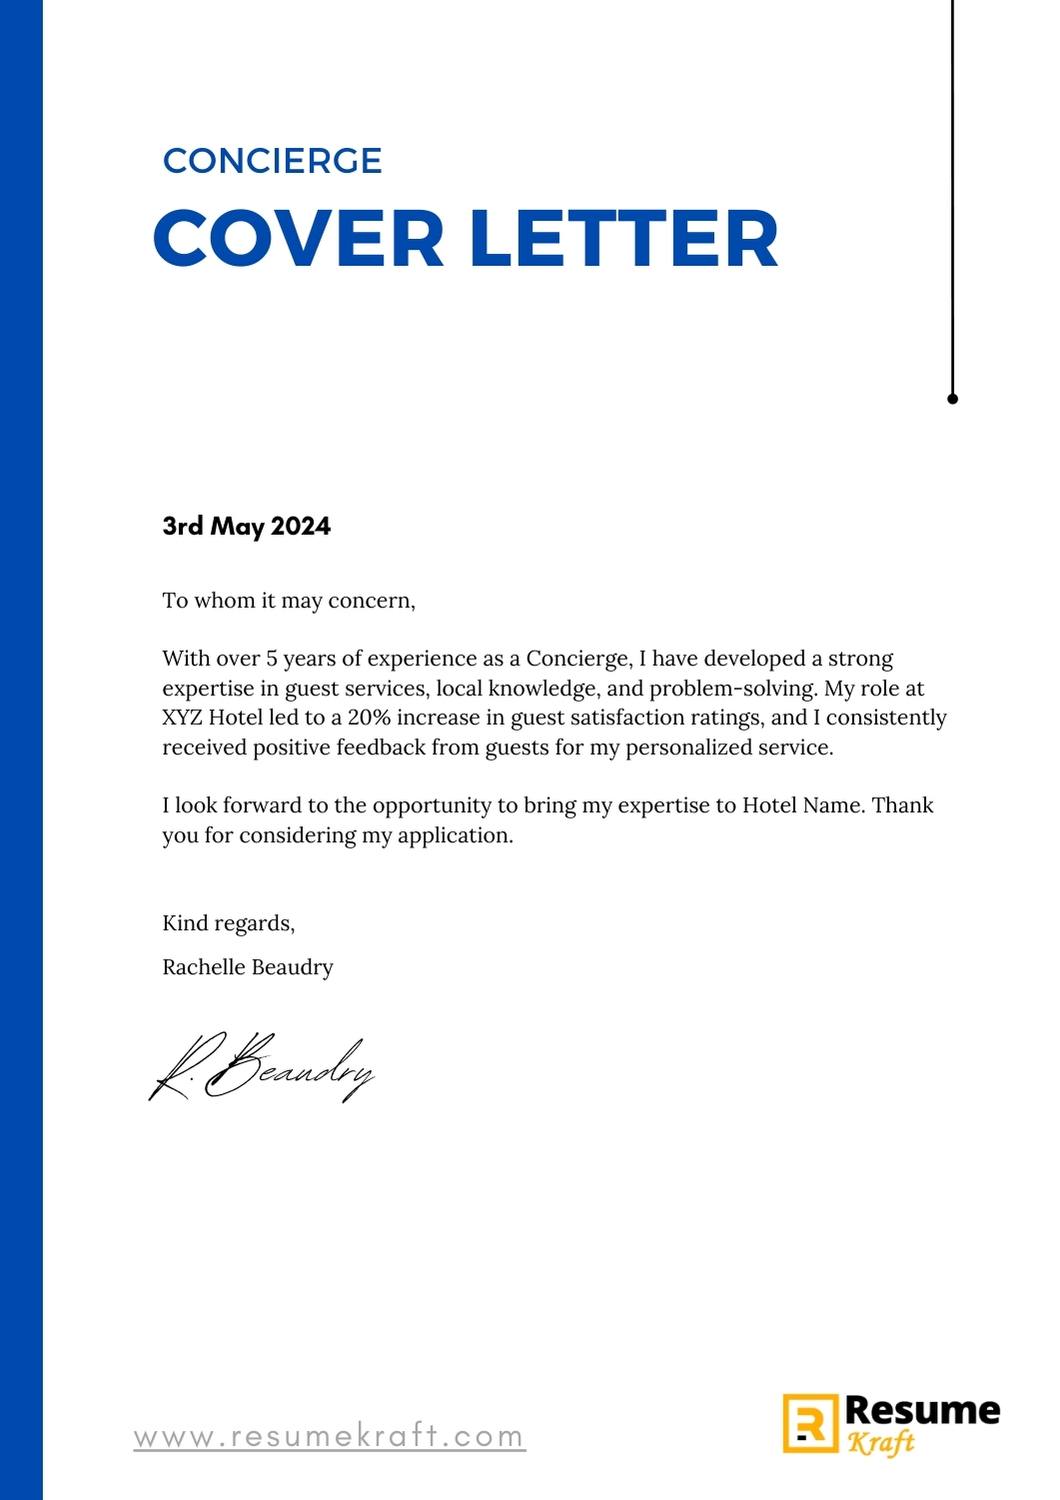 Concierge Cover Letter Cover Letter 